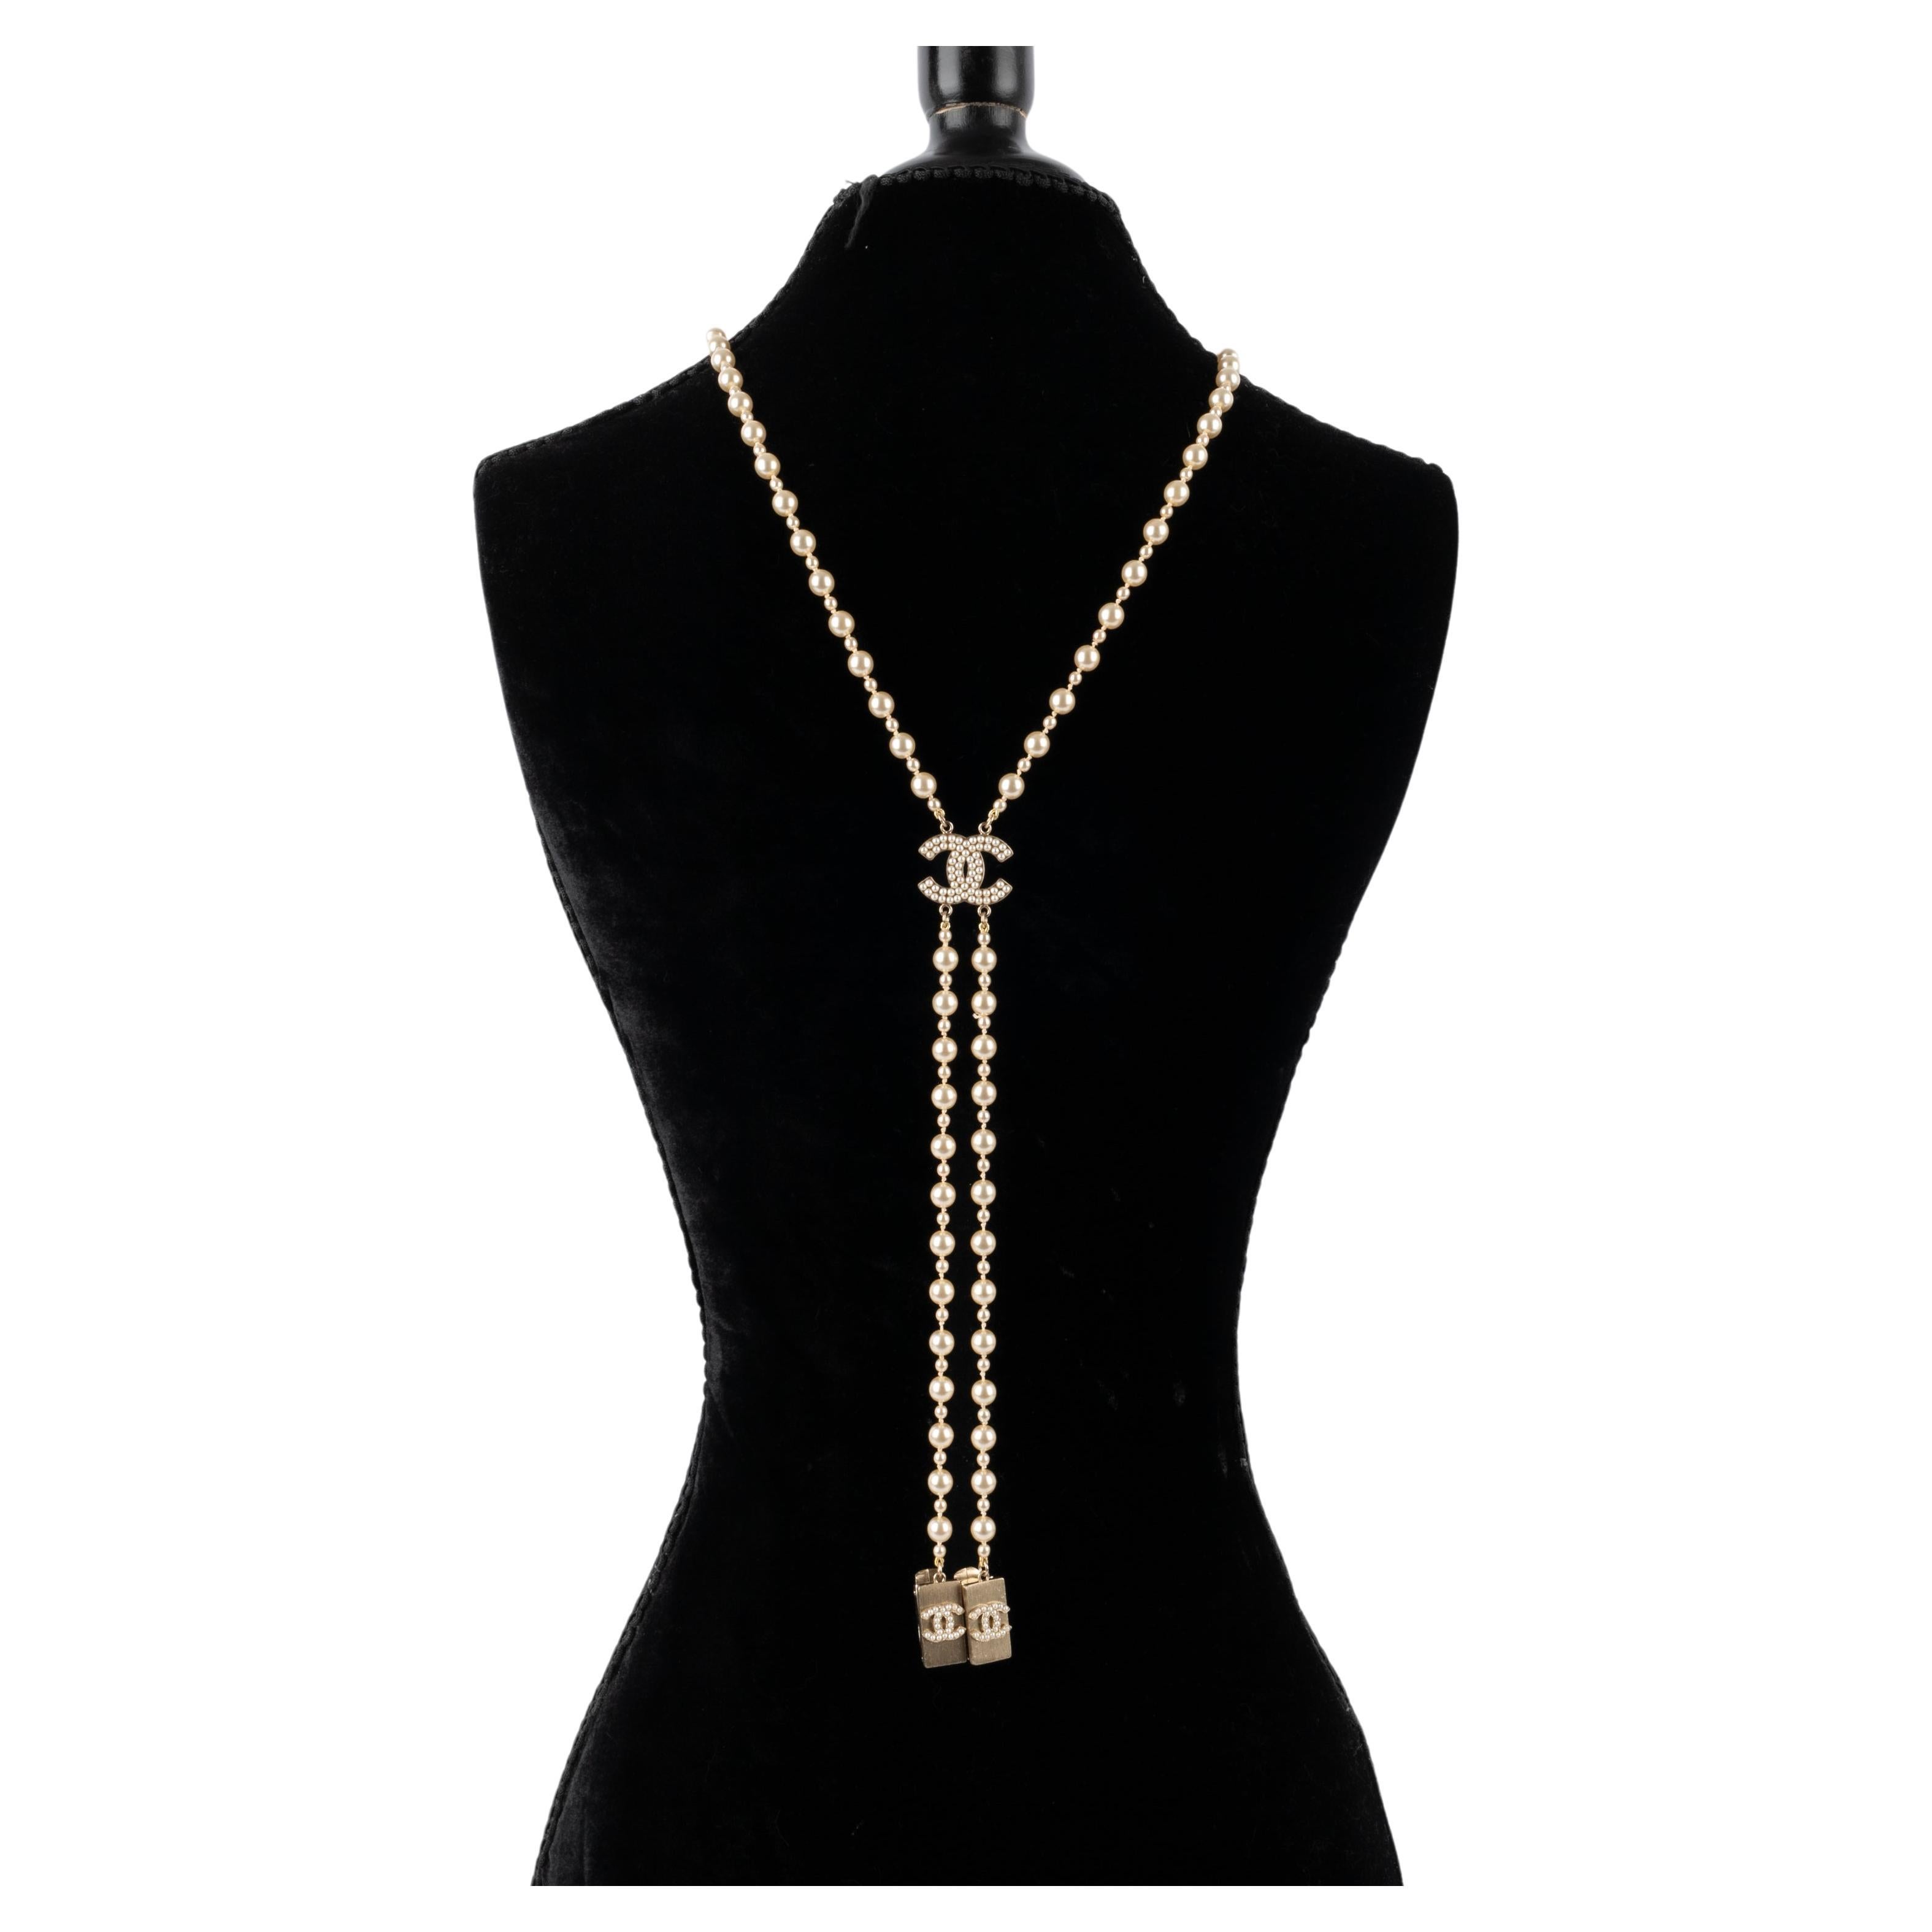 Chanel jewelry suspenders 2004